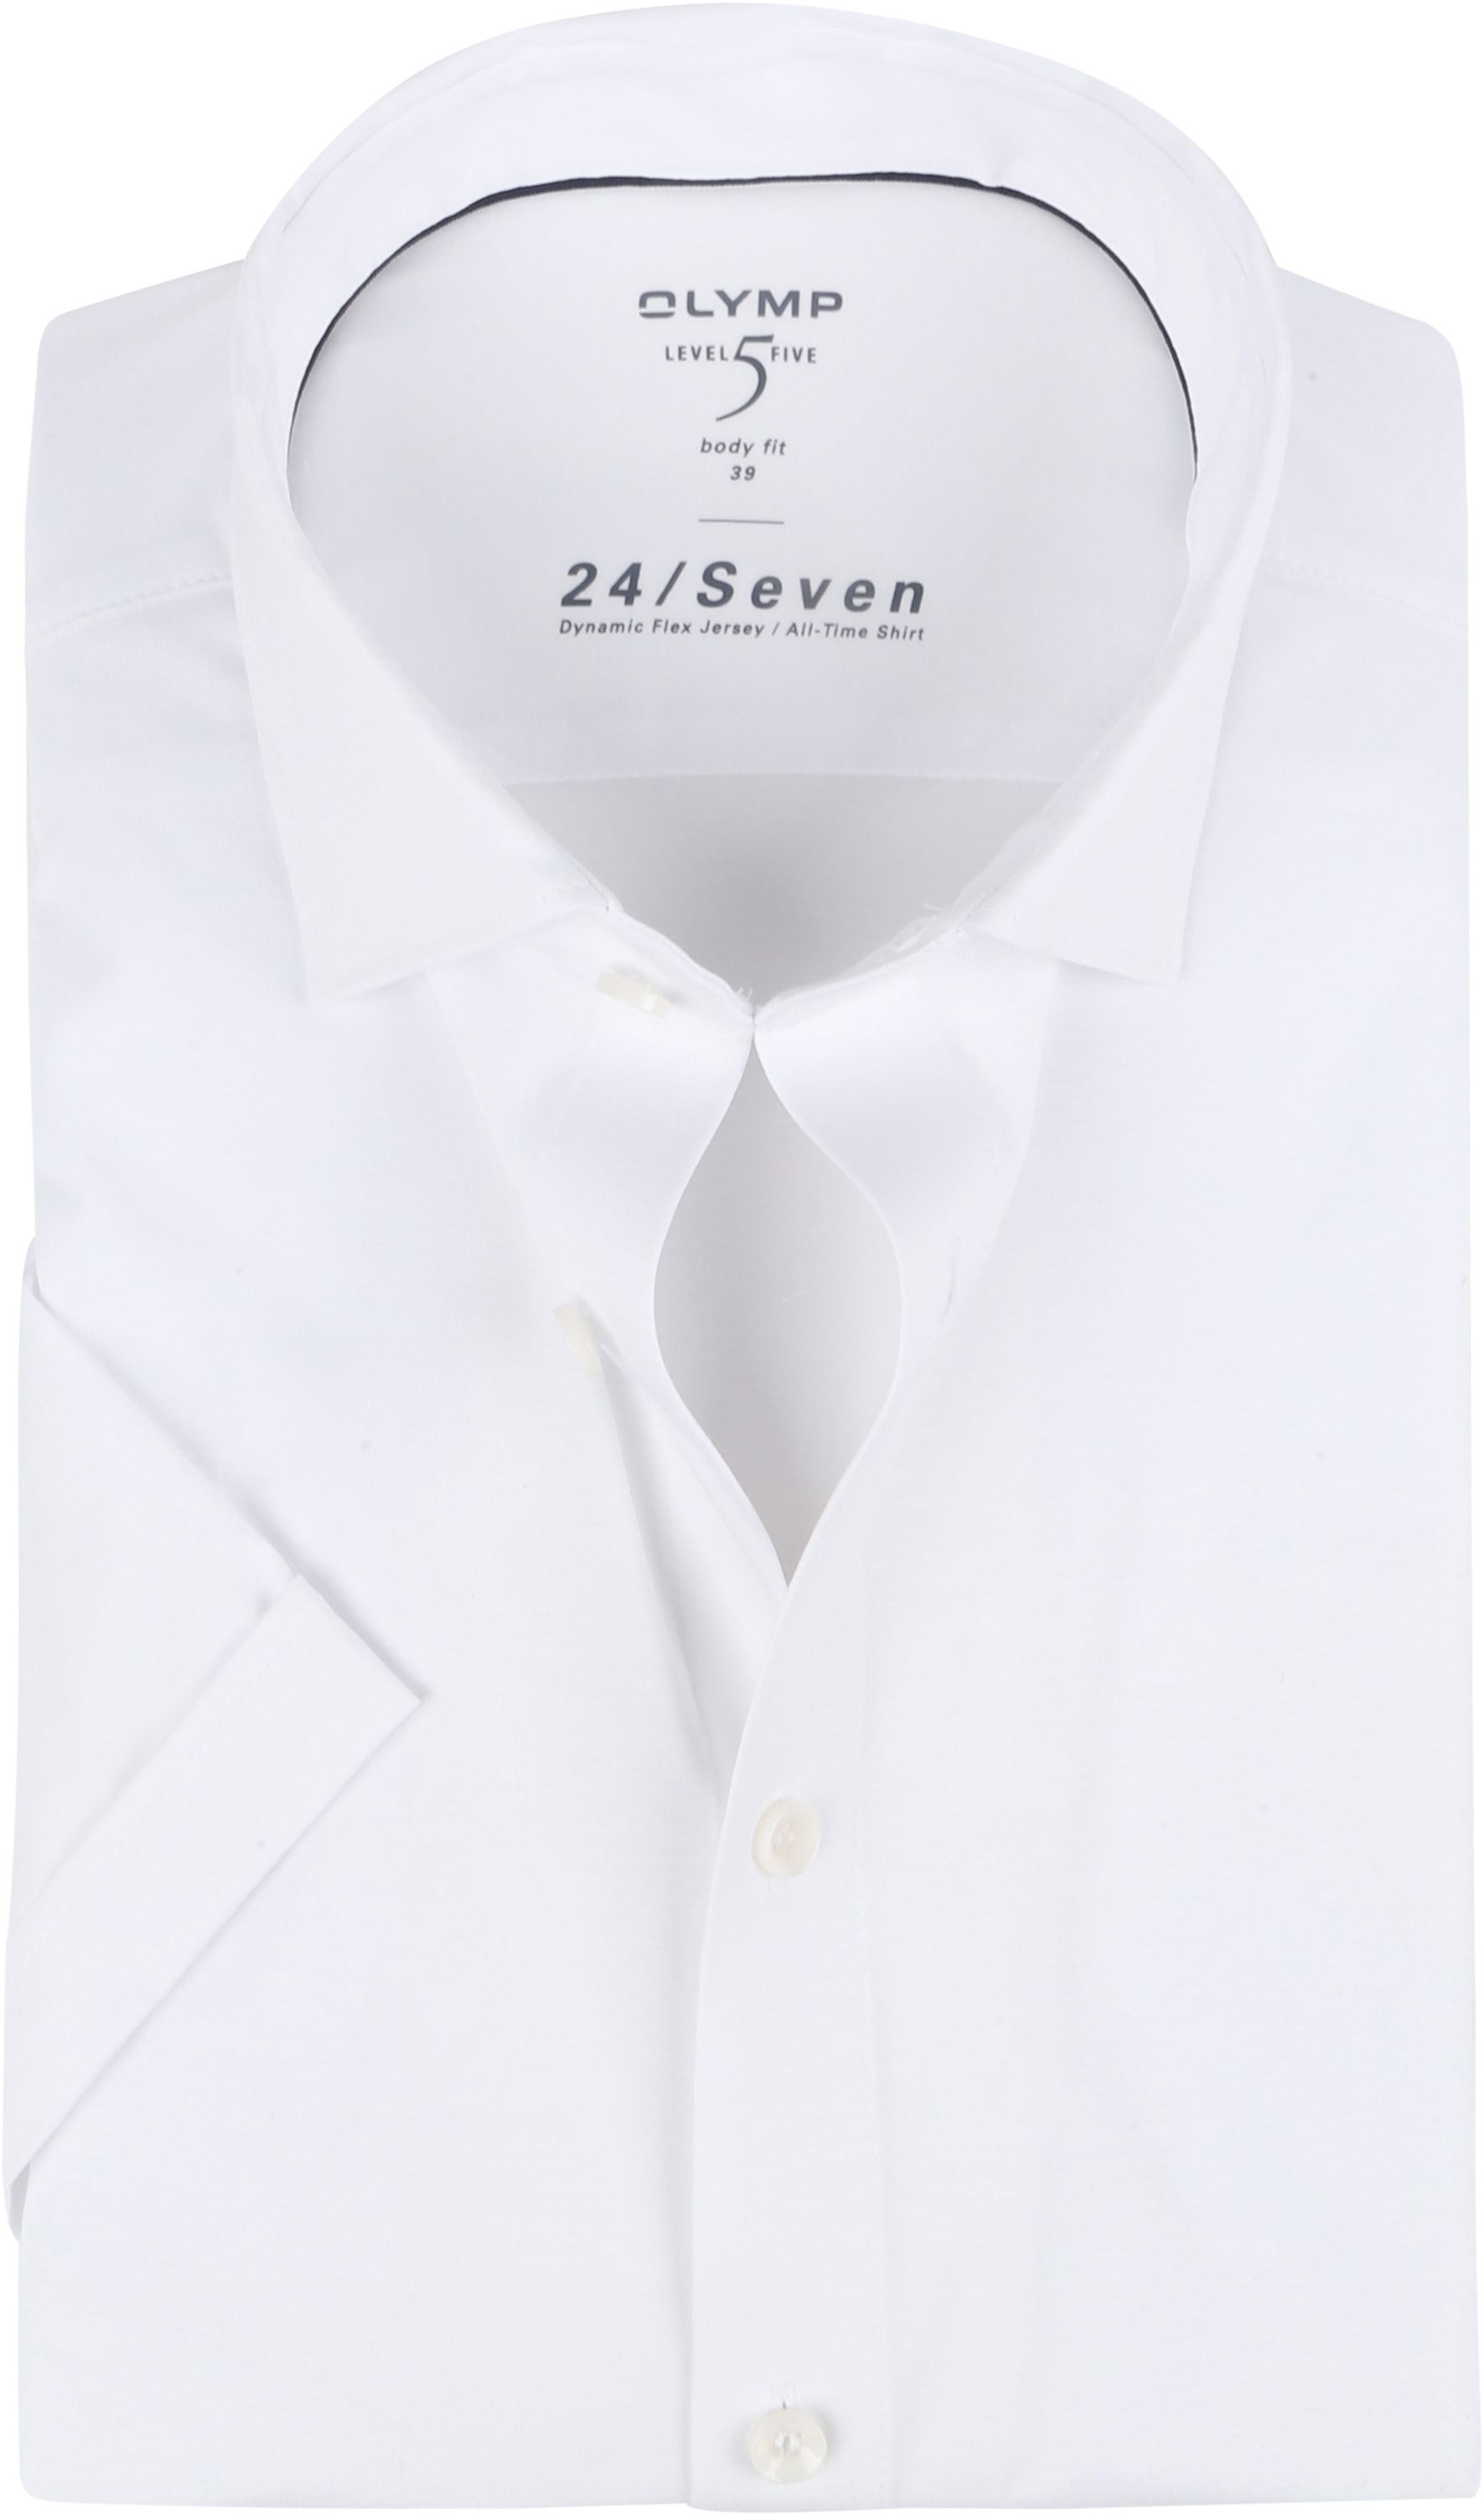 OLYMP Level 5 Shirt 24/Seven White size 15